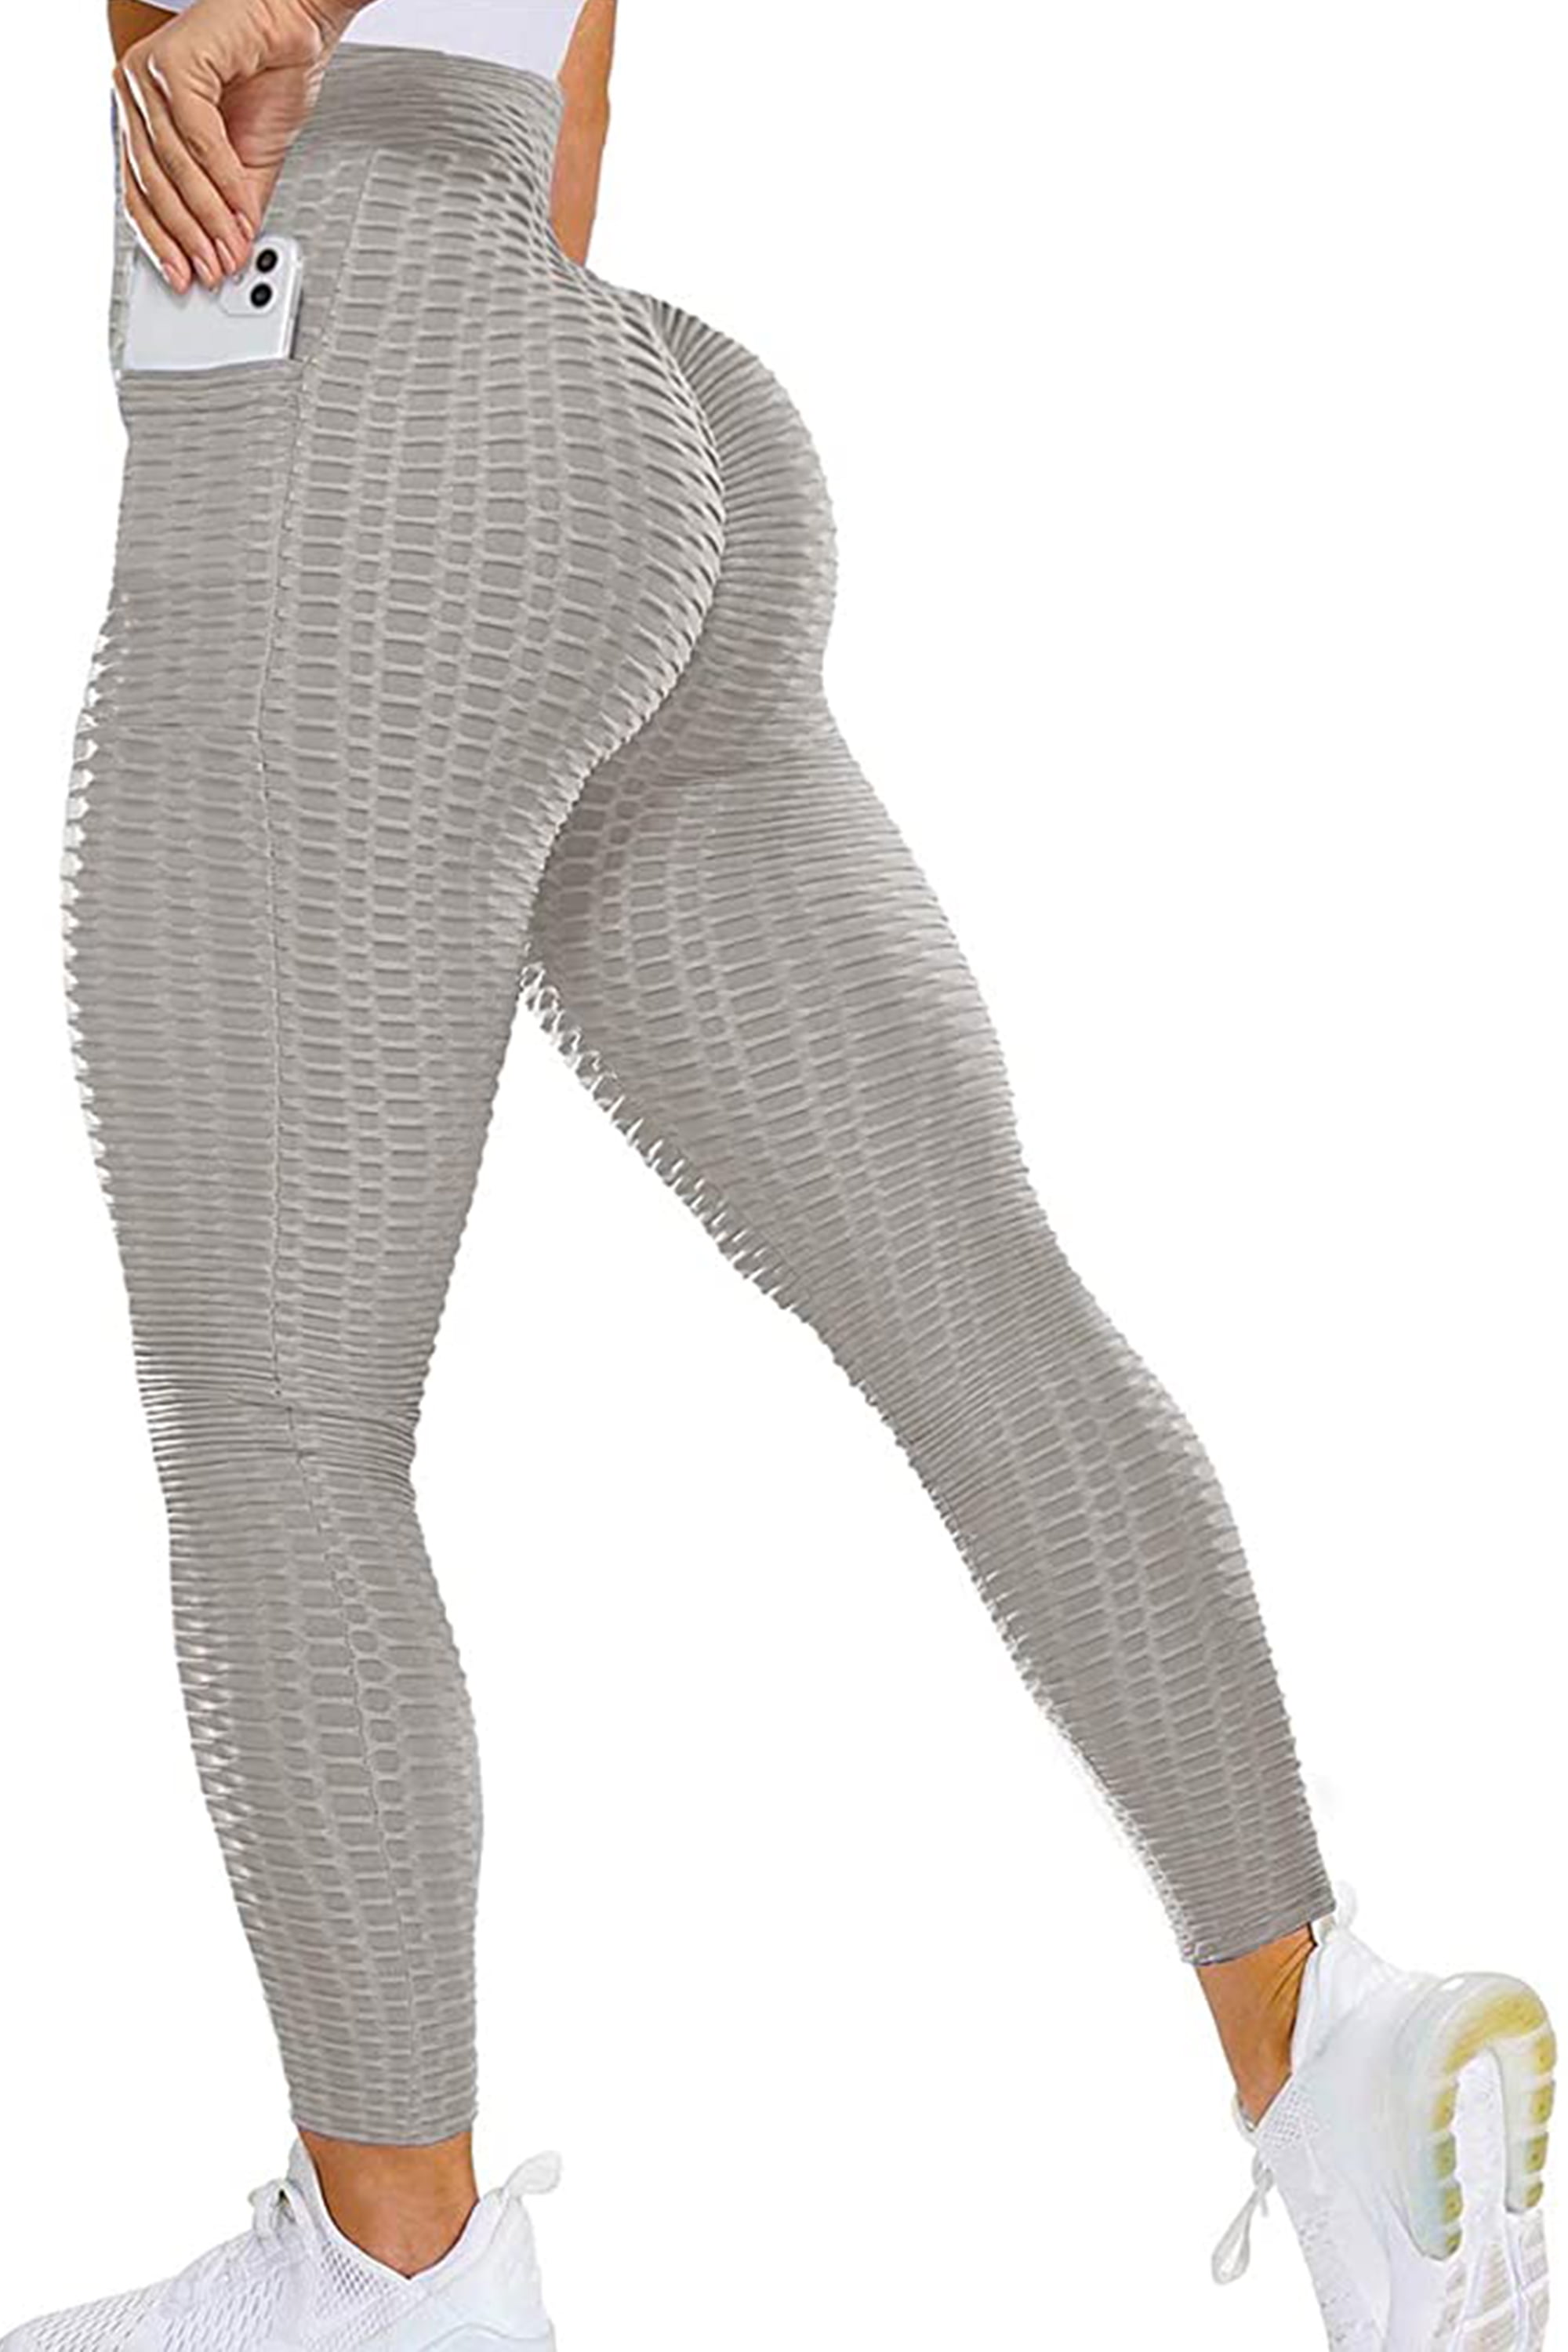 Tik Tok Leggings Yoga Gym Anti Cellulite Booty/ Butt Bum Lift Pants Honey Comb 